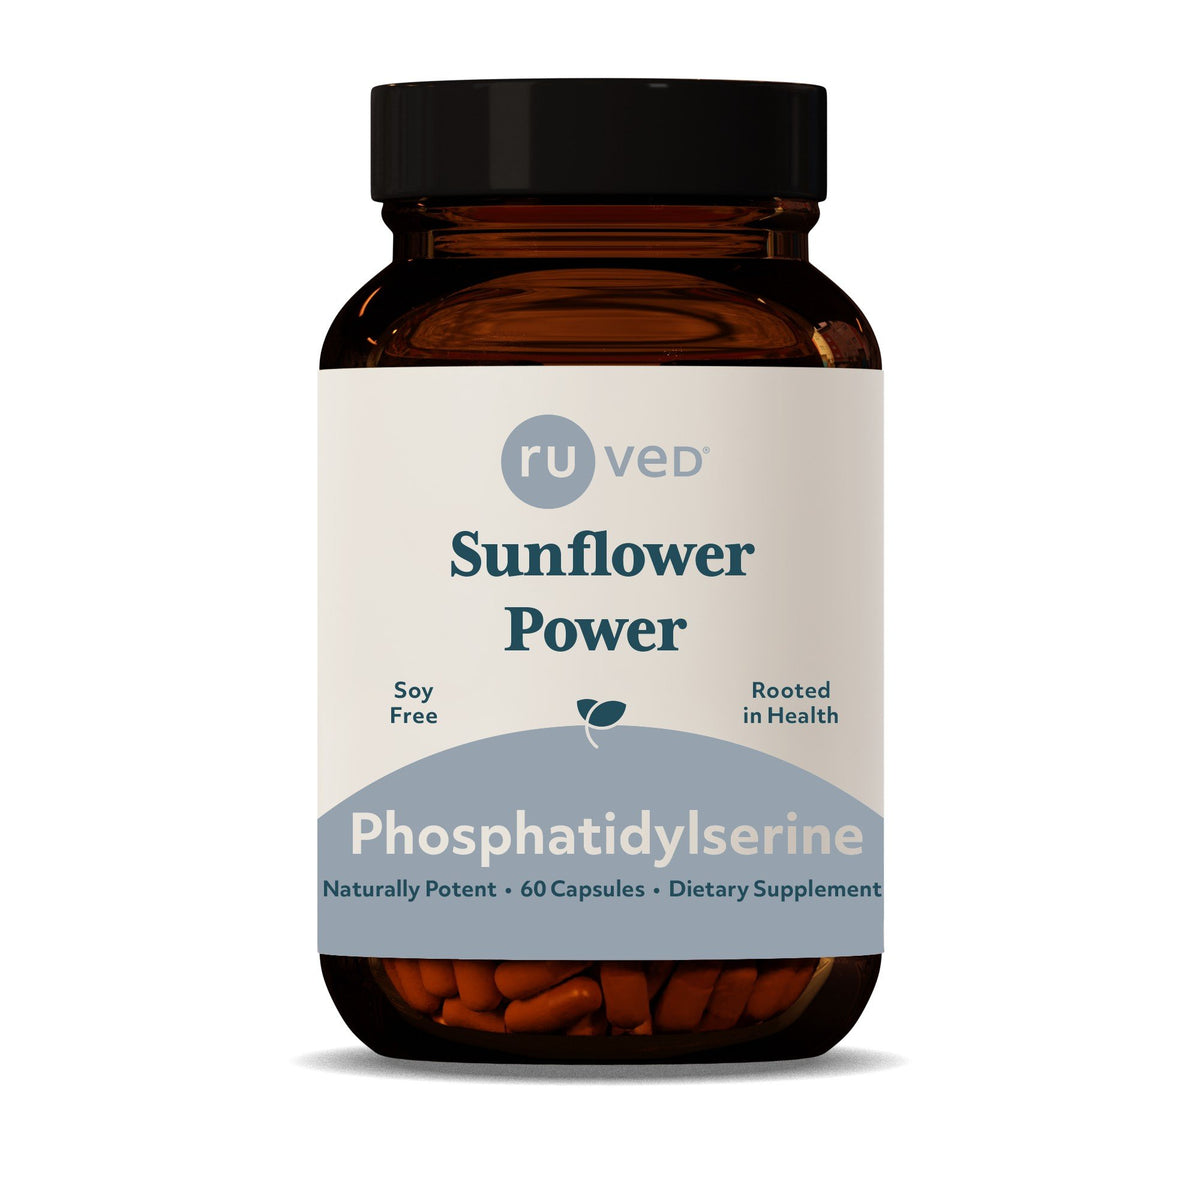 RUVED Sunflower Power Phosphatidylserine 60 Capsule